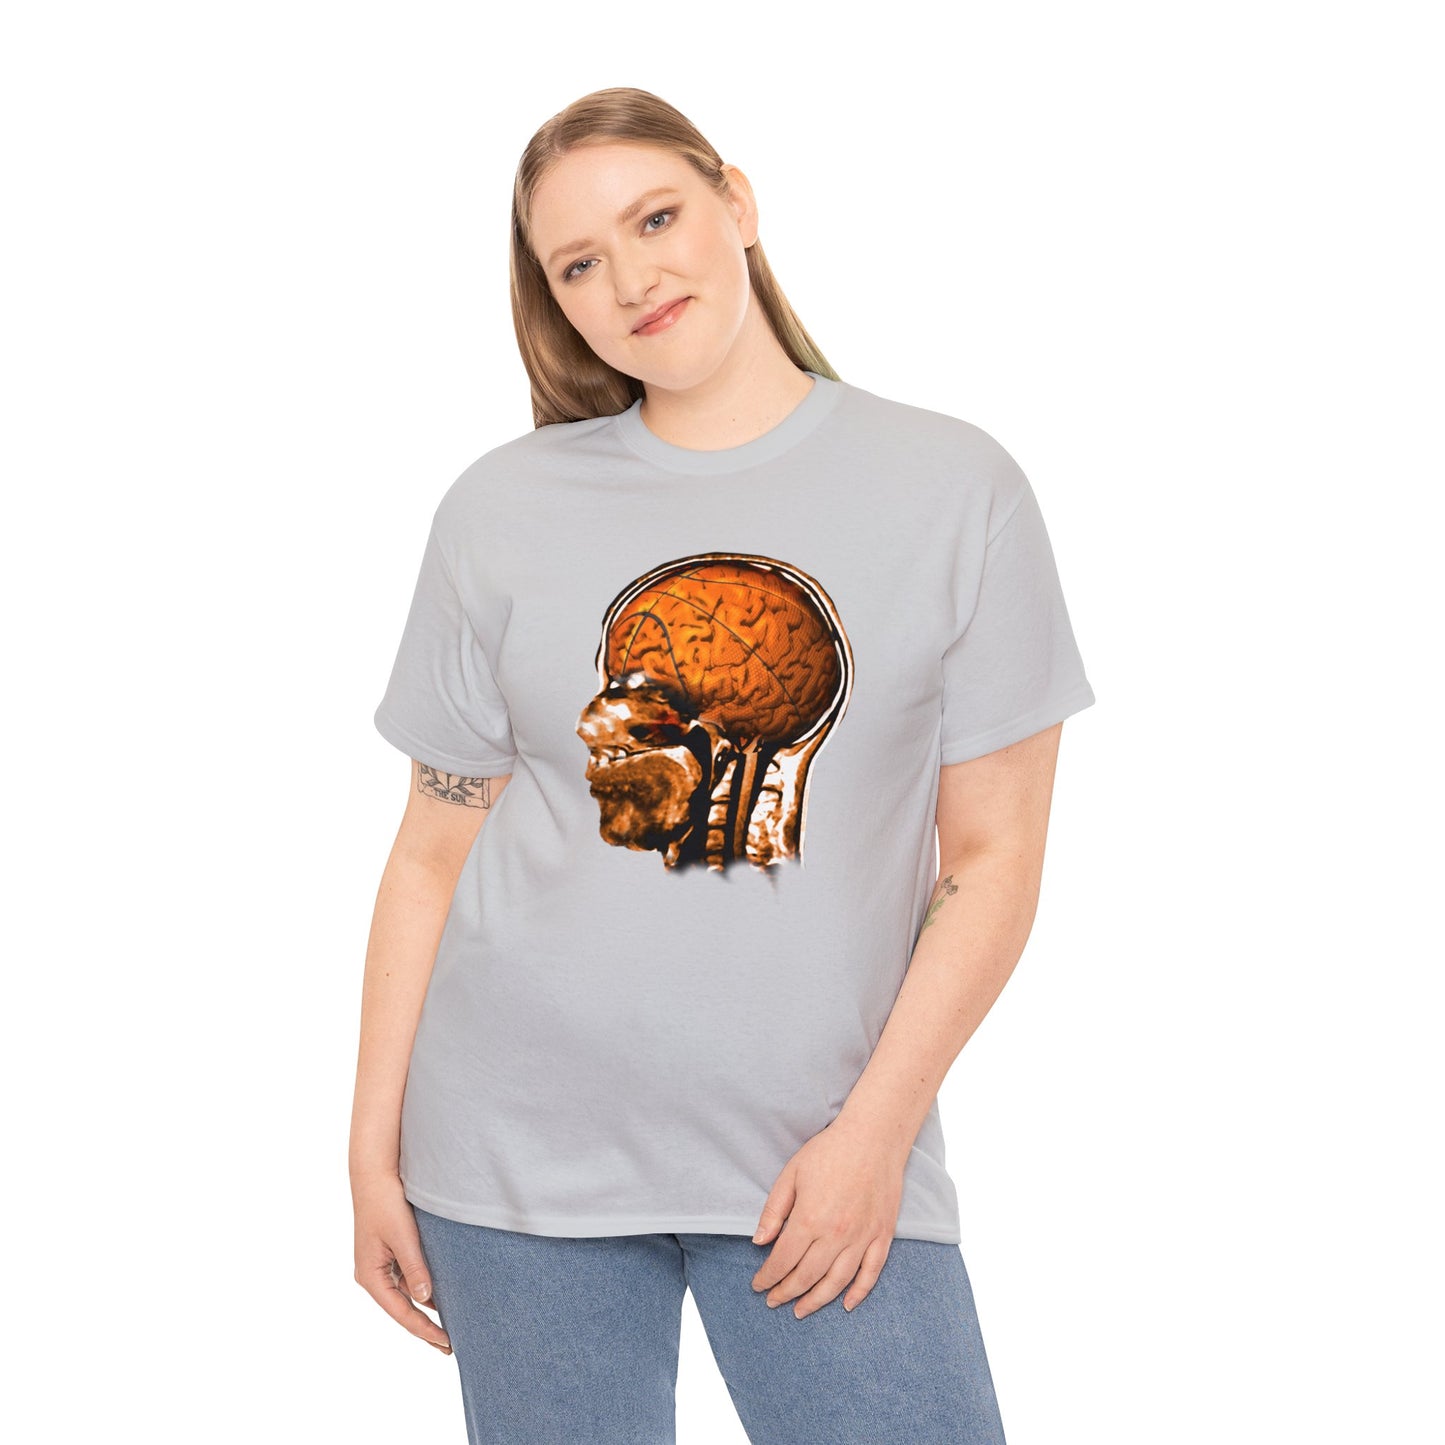 X-Ray Basketball, Brain t-shirt, Basketball Brain, Basketball Shirt, Basketball on the brain, Funny Basketball Shirt Gifts For Dads